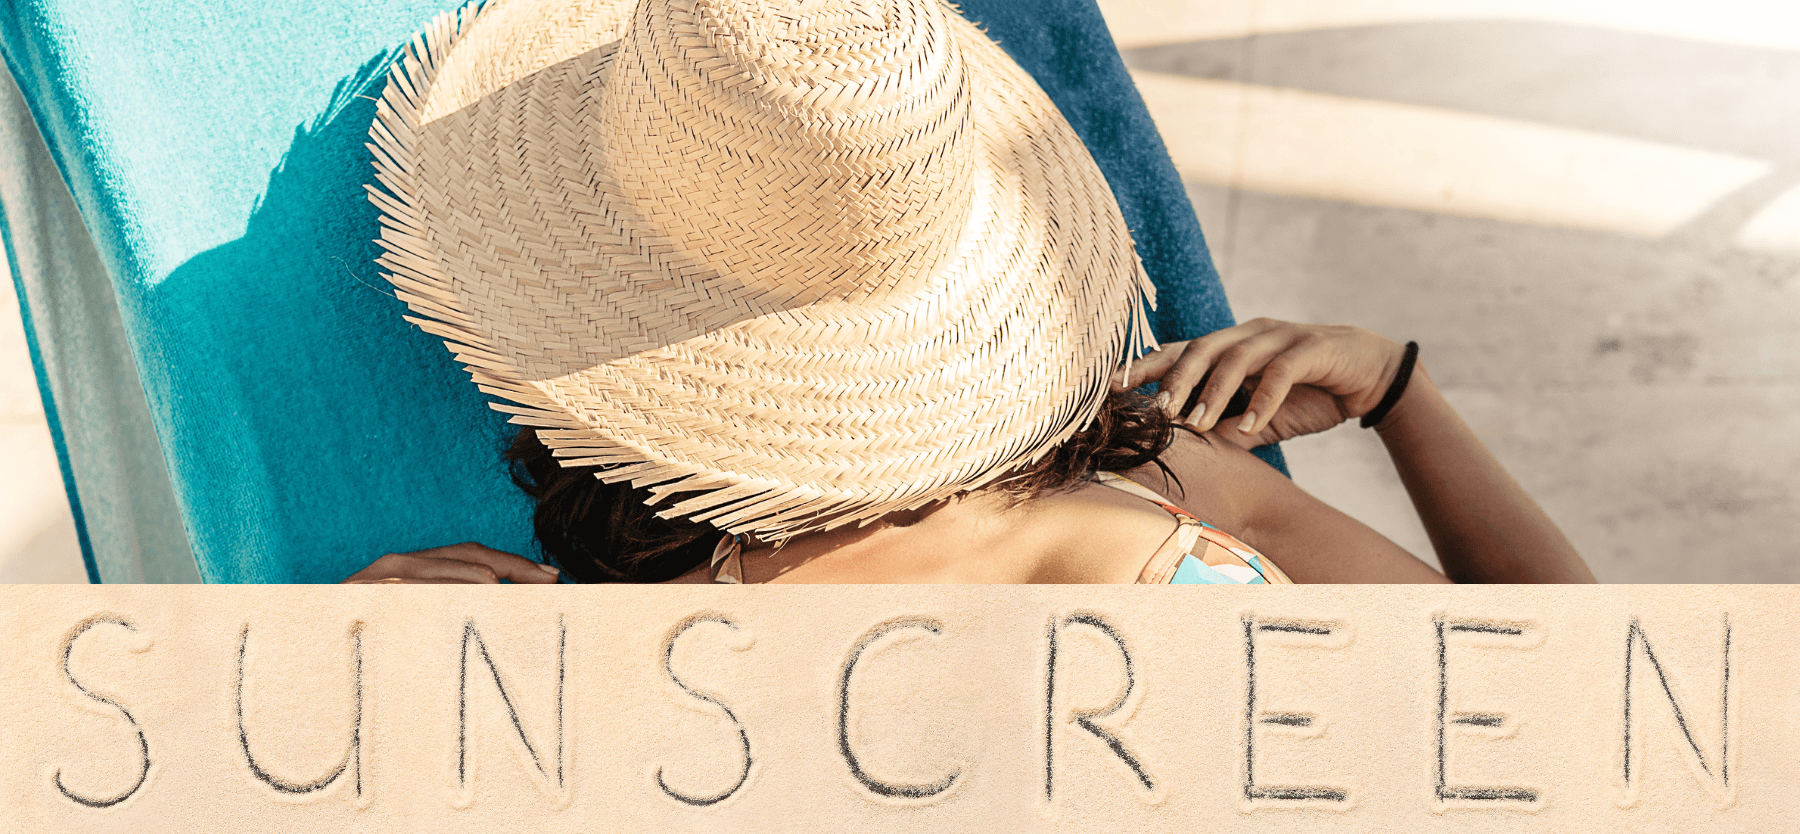 Sunscreen written in sand